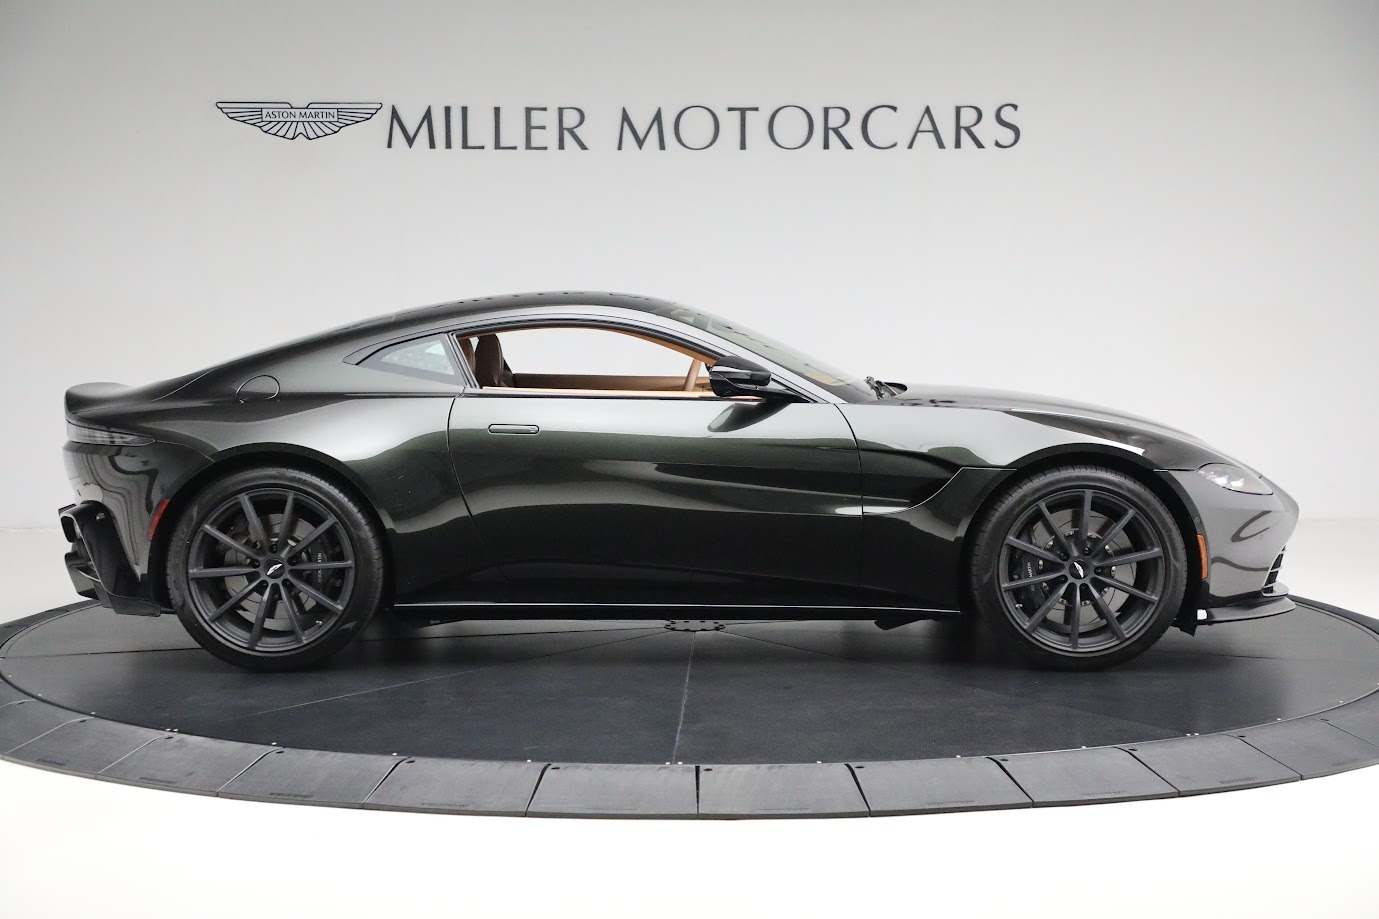 https://www.millermotorcars.com/imagetag/5560/8/l/New-2022-Aston-Martin-Vantage-Auto.jpg